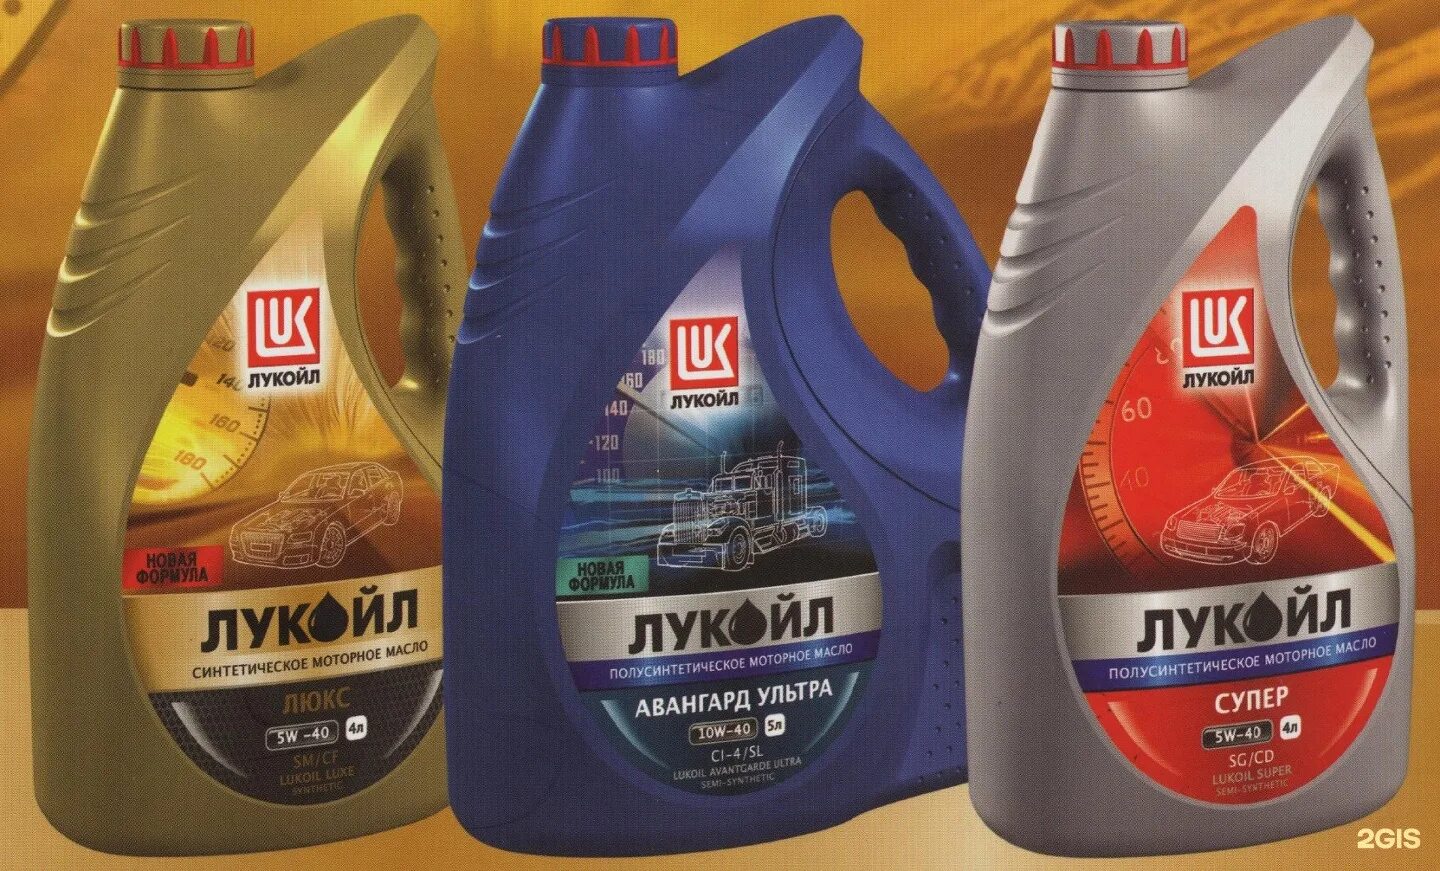 Лукойл масла номера. Lukoil масло. Лукойл продукция. Моторное масло Лукойл реклама. Лукойл масла баннер.